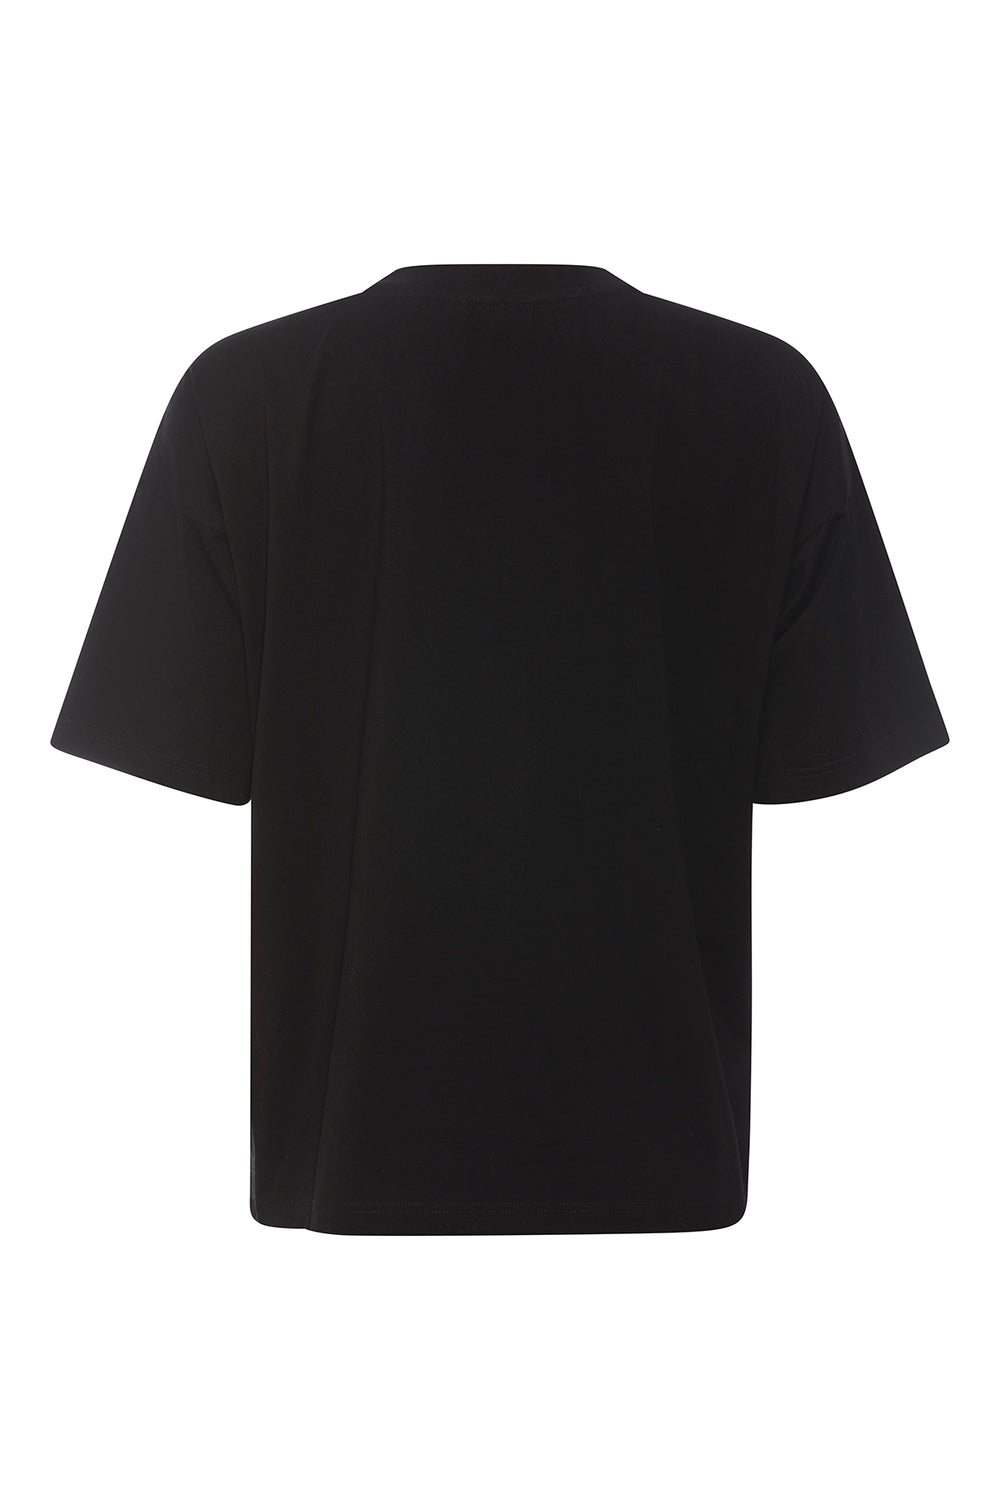 PBO Bravo T-shirt T-SHIRTS Sort